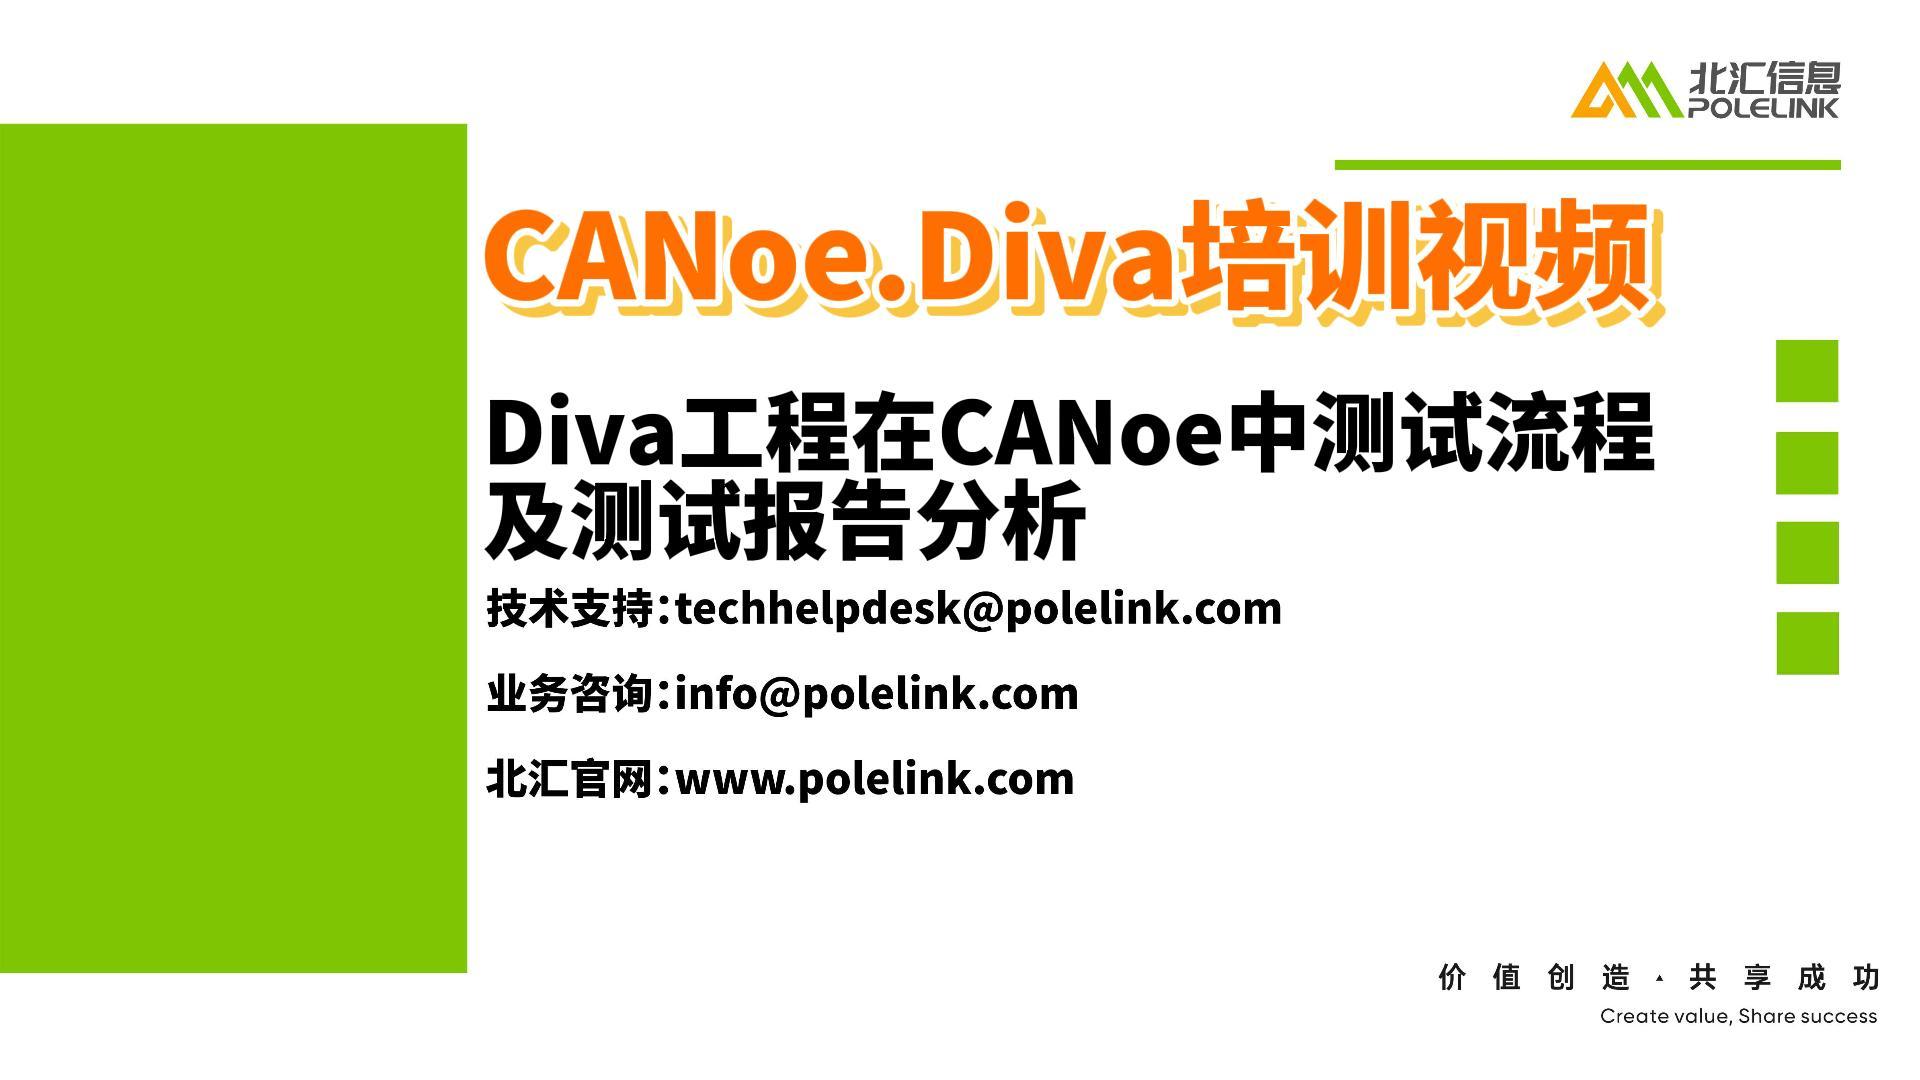 Diva工程在CANoe中的測試流程及測試報告分析#診斷自動化測試 #CANoe
 